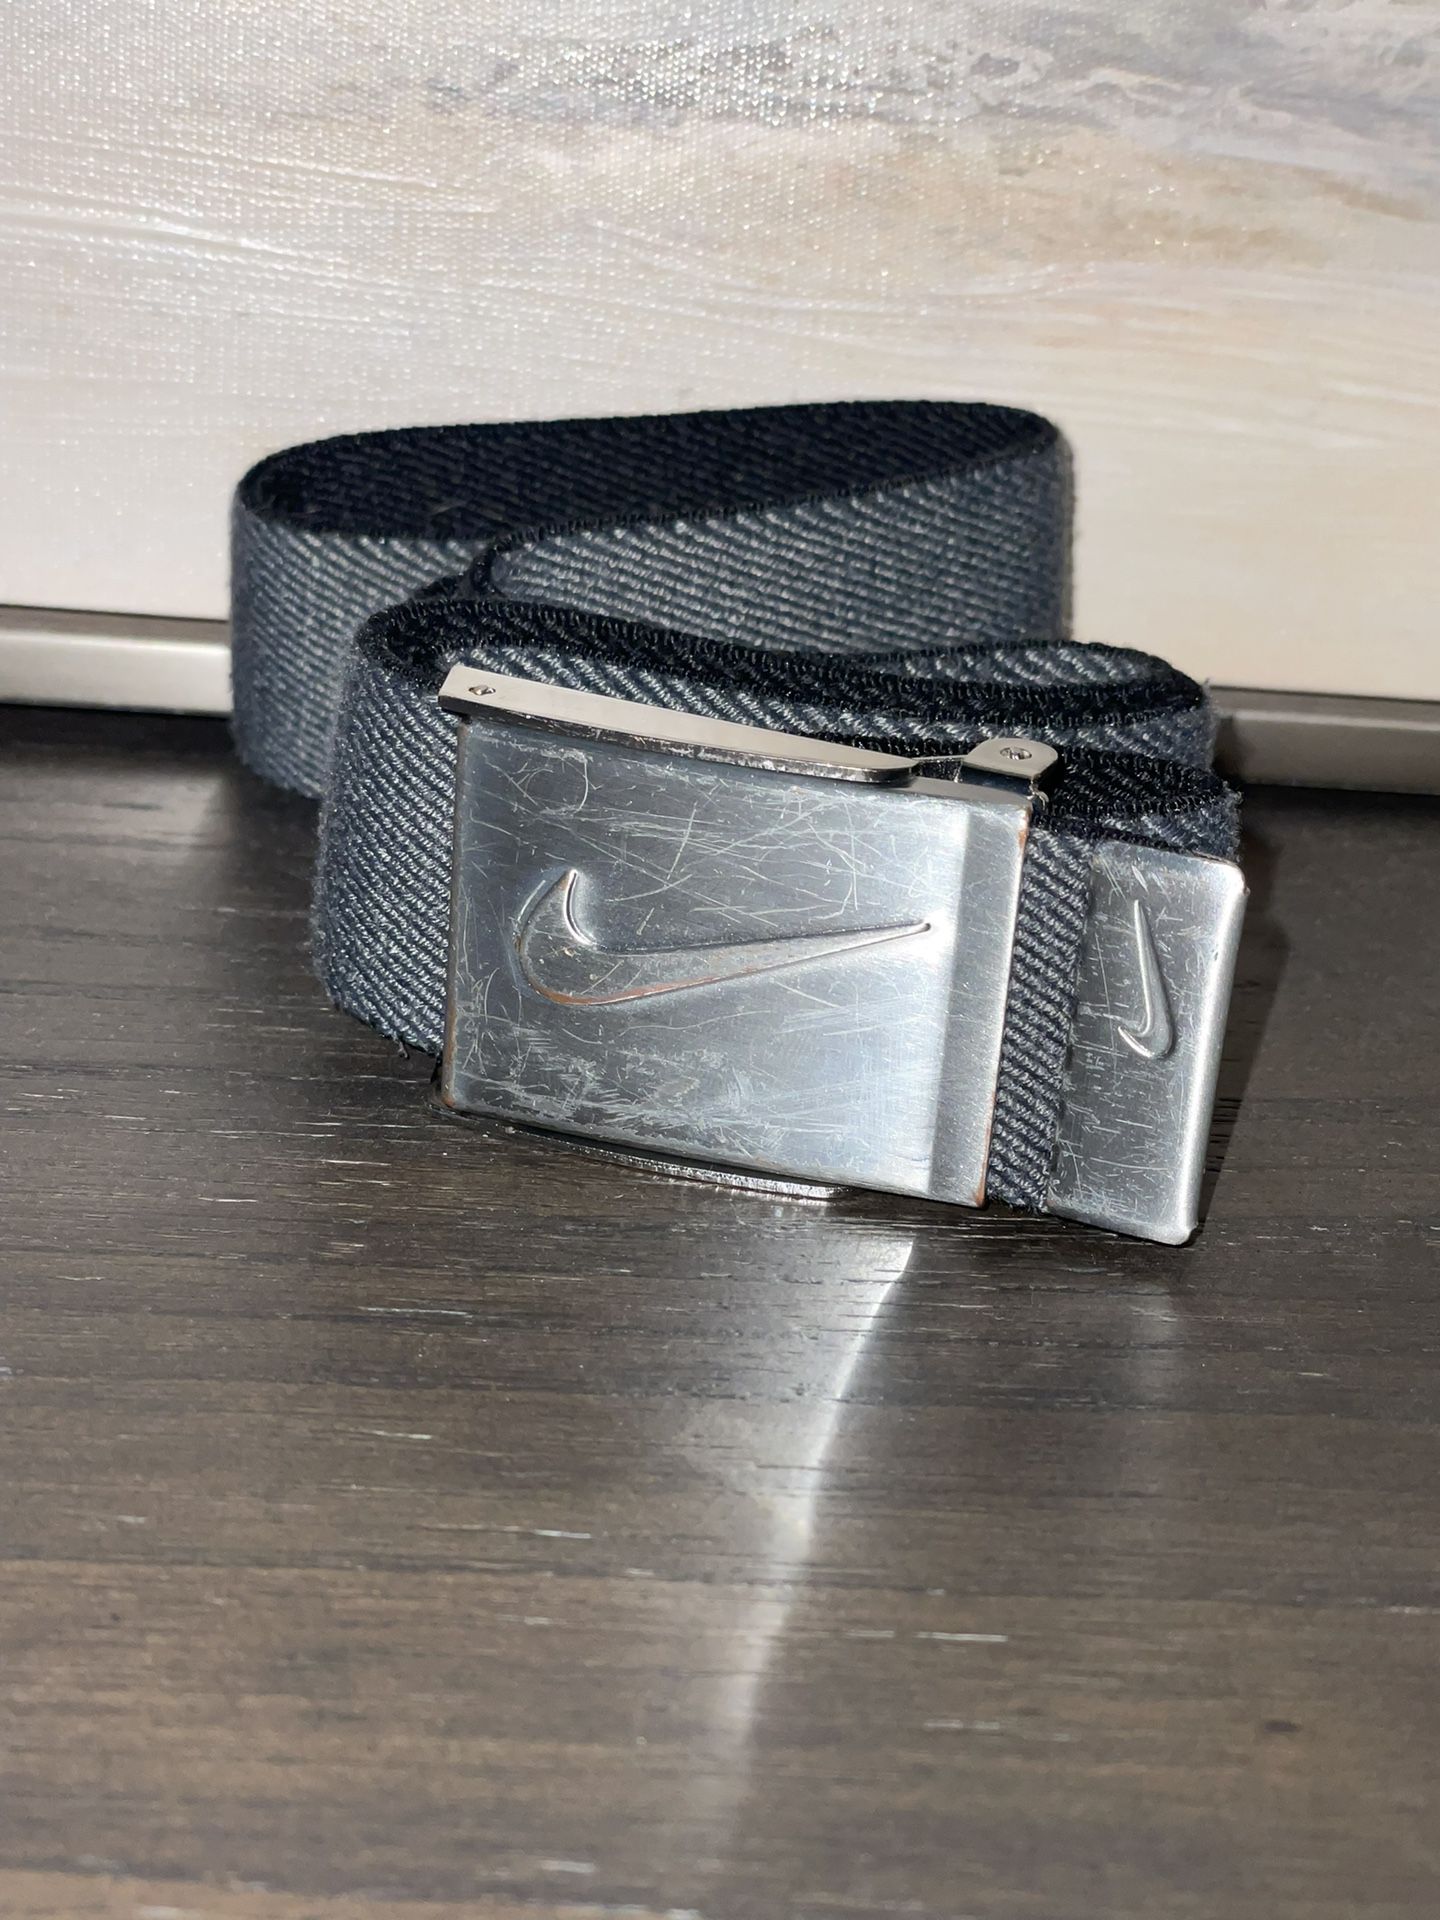 Nike Reversible Stretch Web Belt Size 29/42